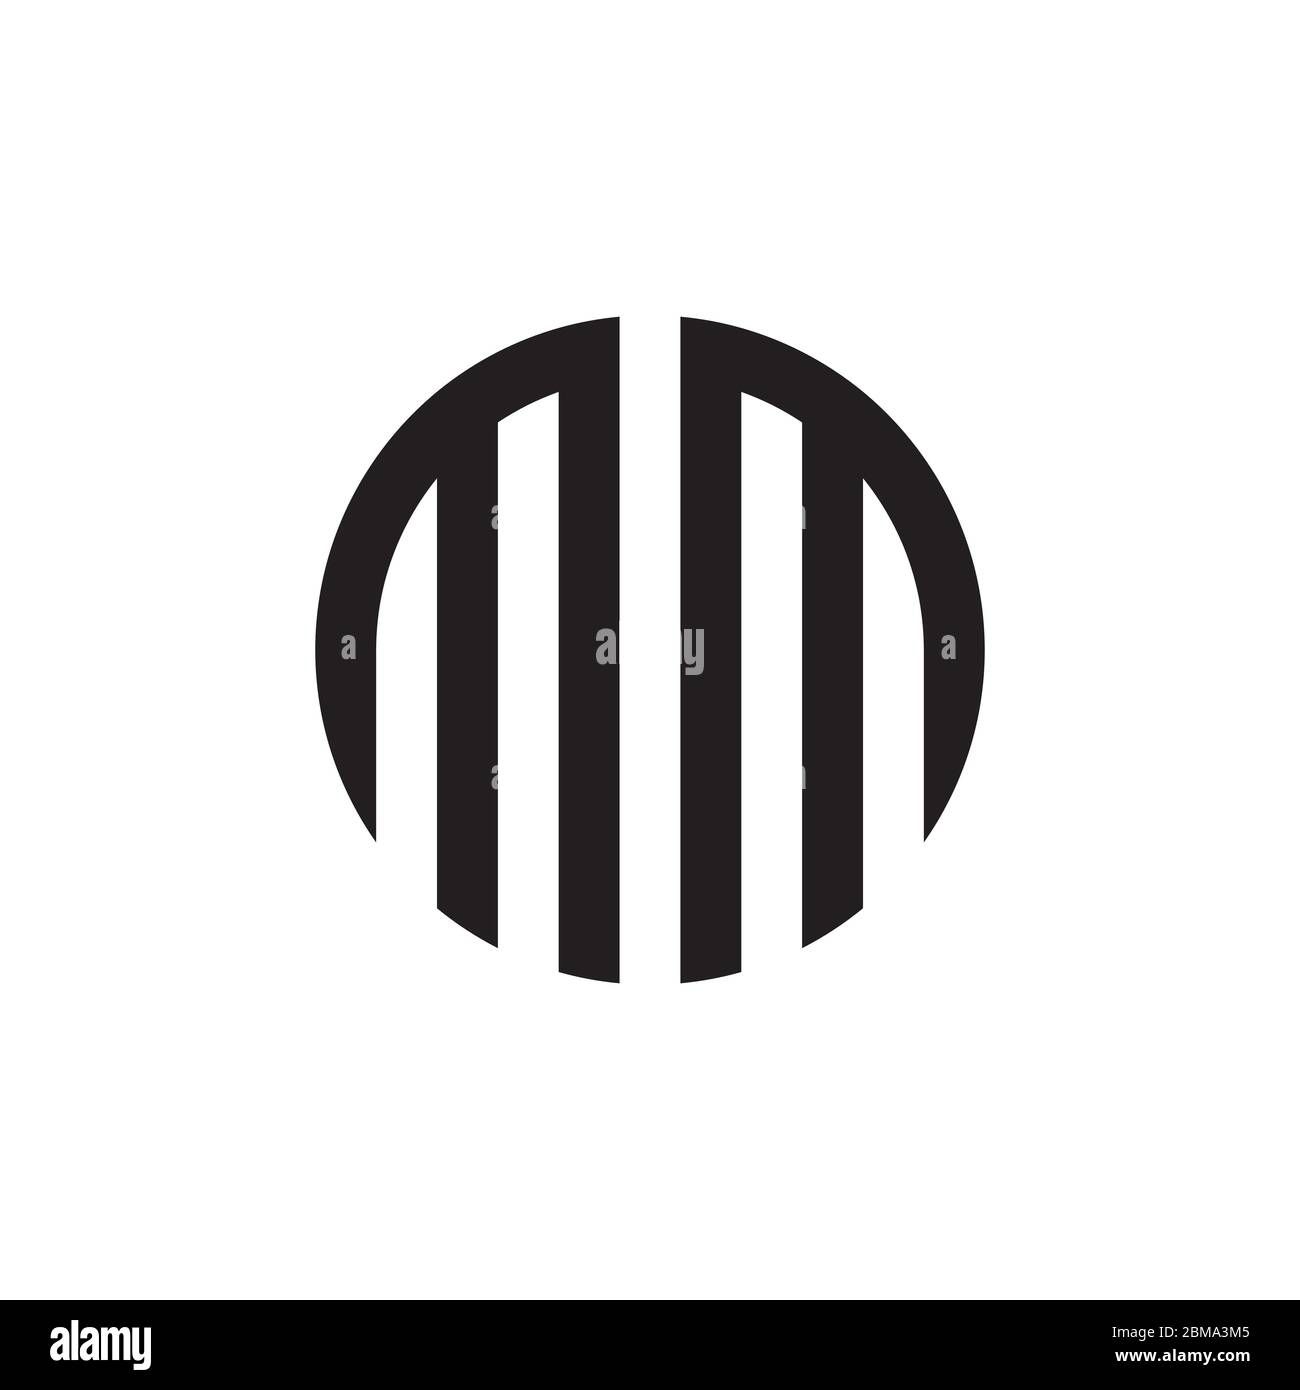 M M circle logo design vector Stock Vector Image & Art - Alamy